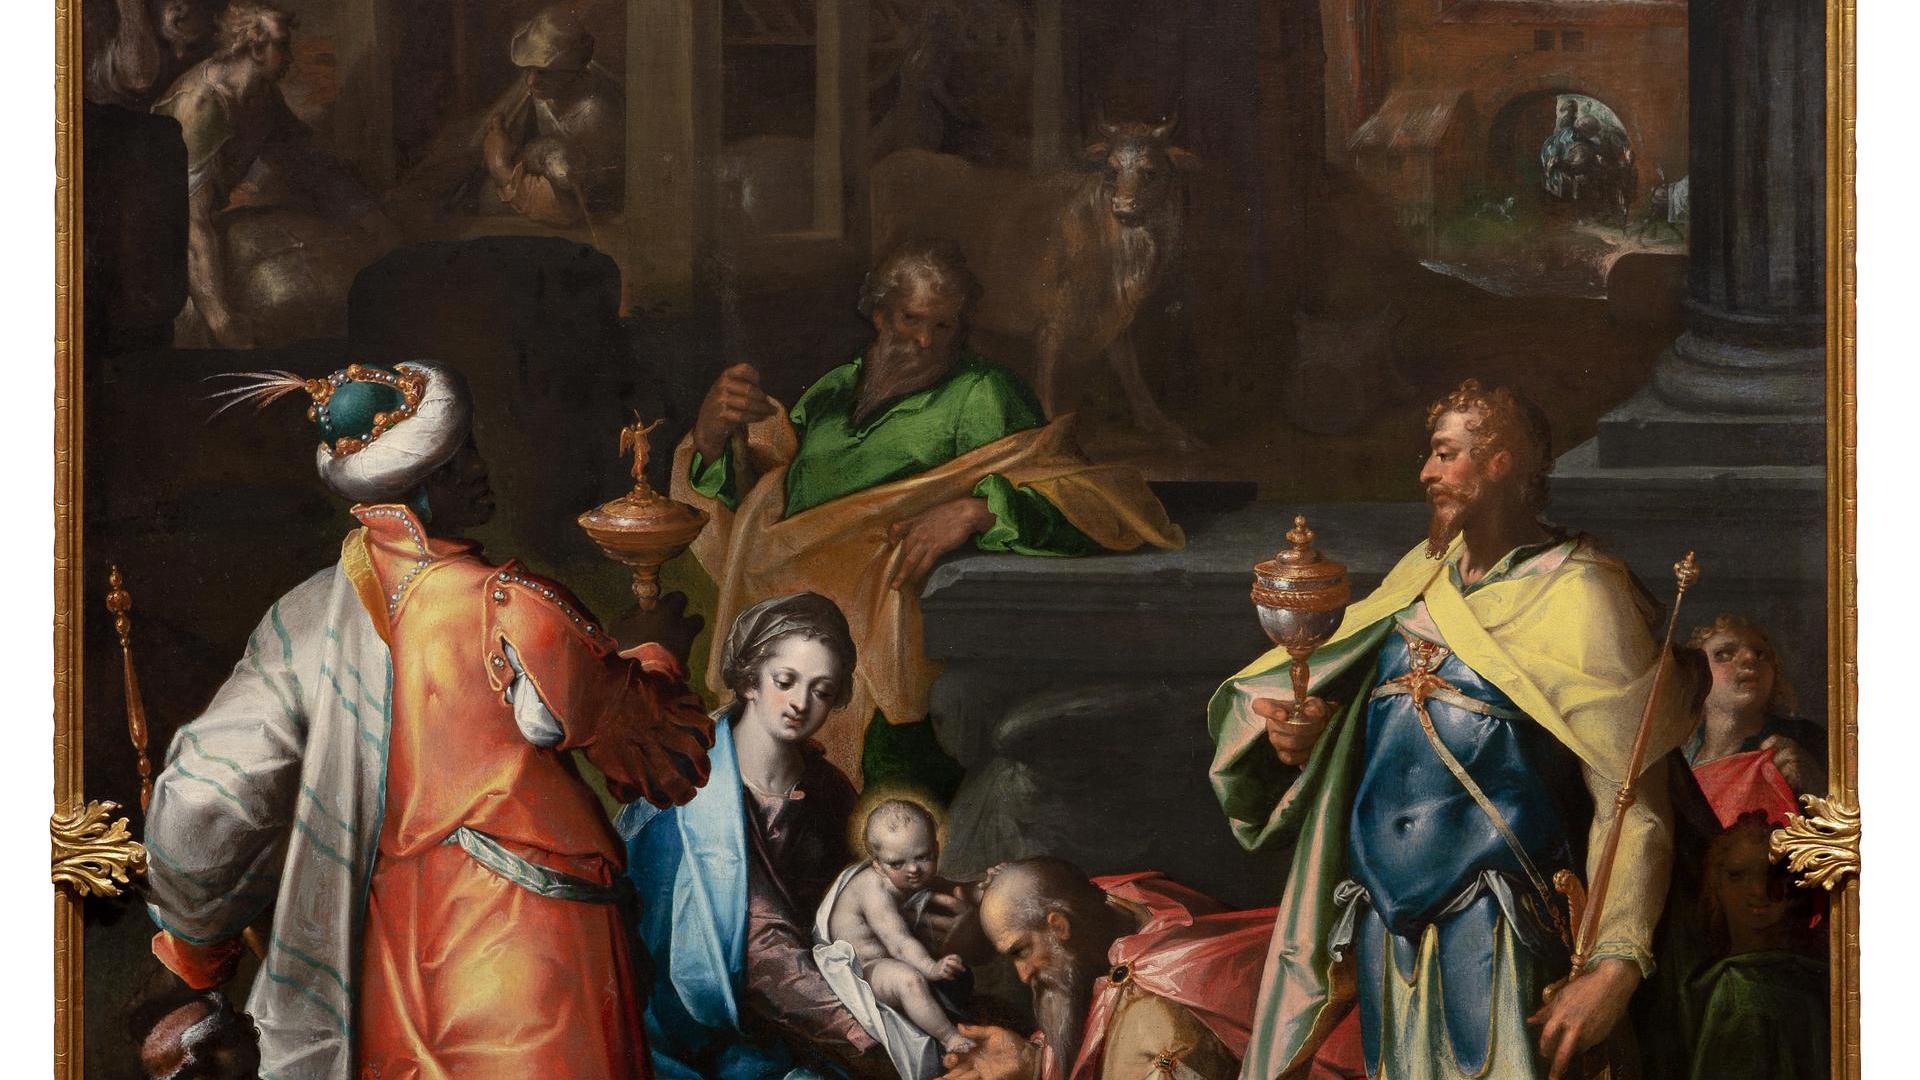 The Adoration of the Kings by Bartholomaeus Spranger